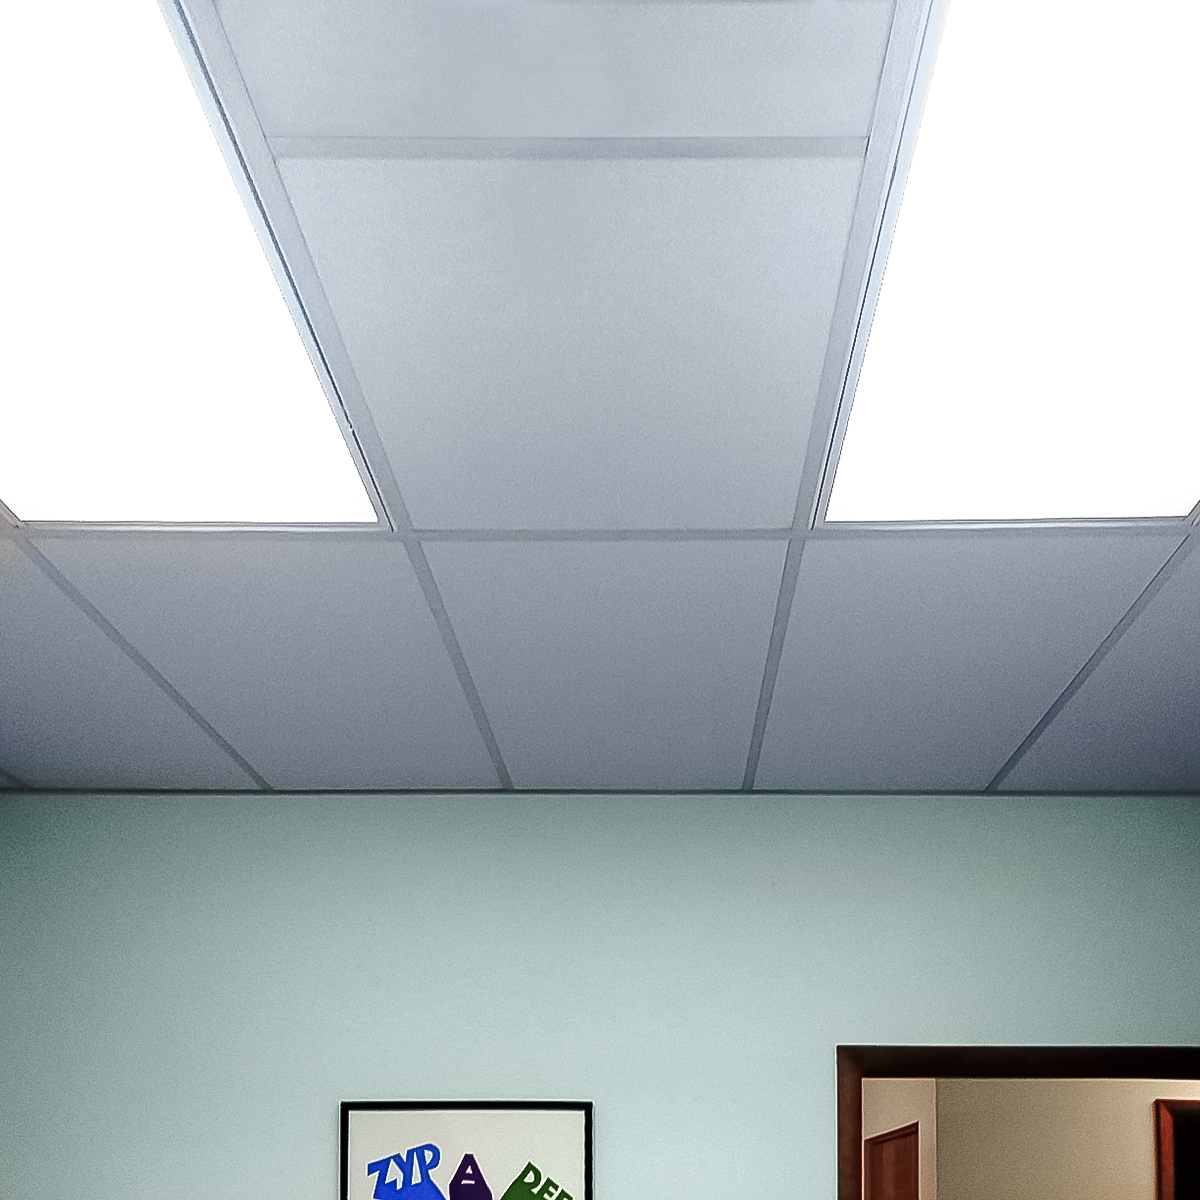 24×24 Acoustical Ceiling Tilesacoustitherm acoustic ceiling tile acoustical solutions